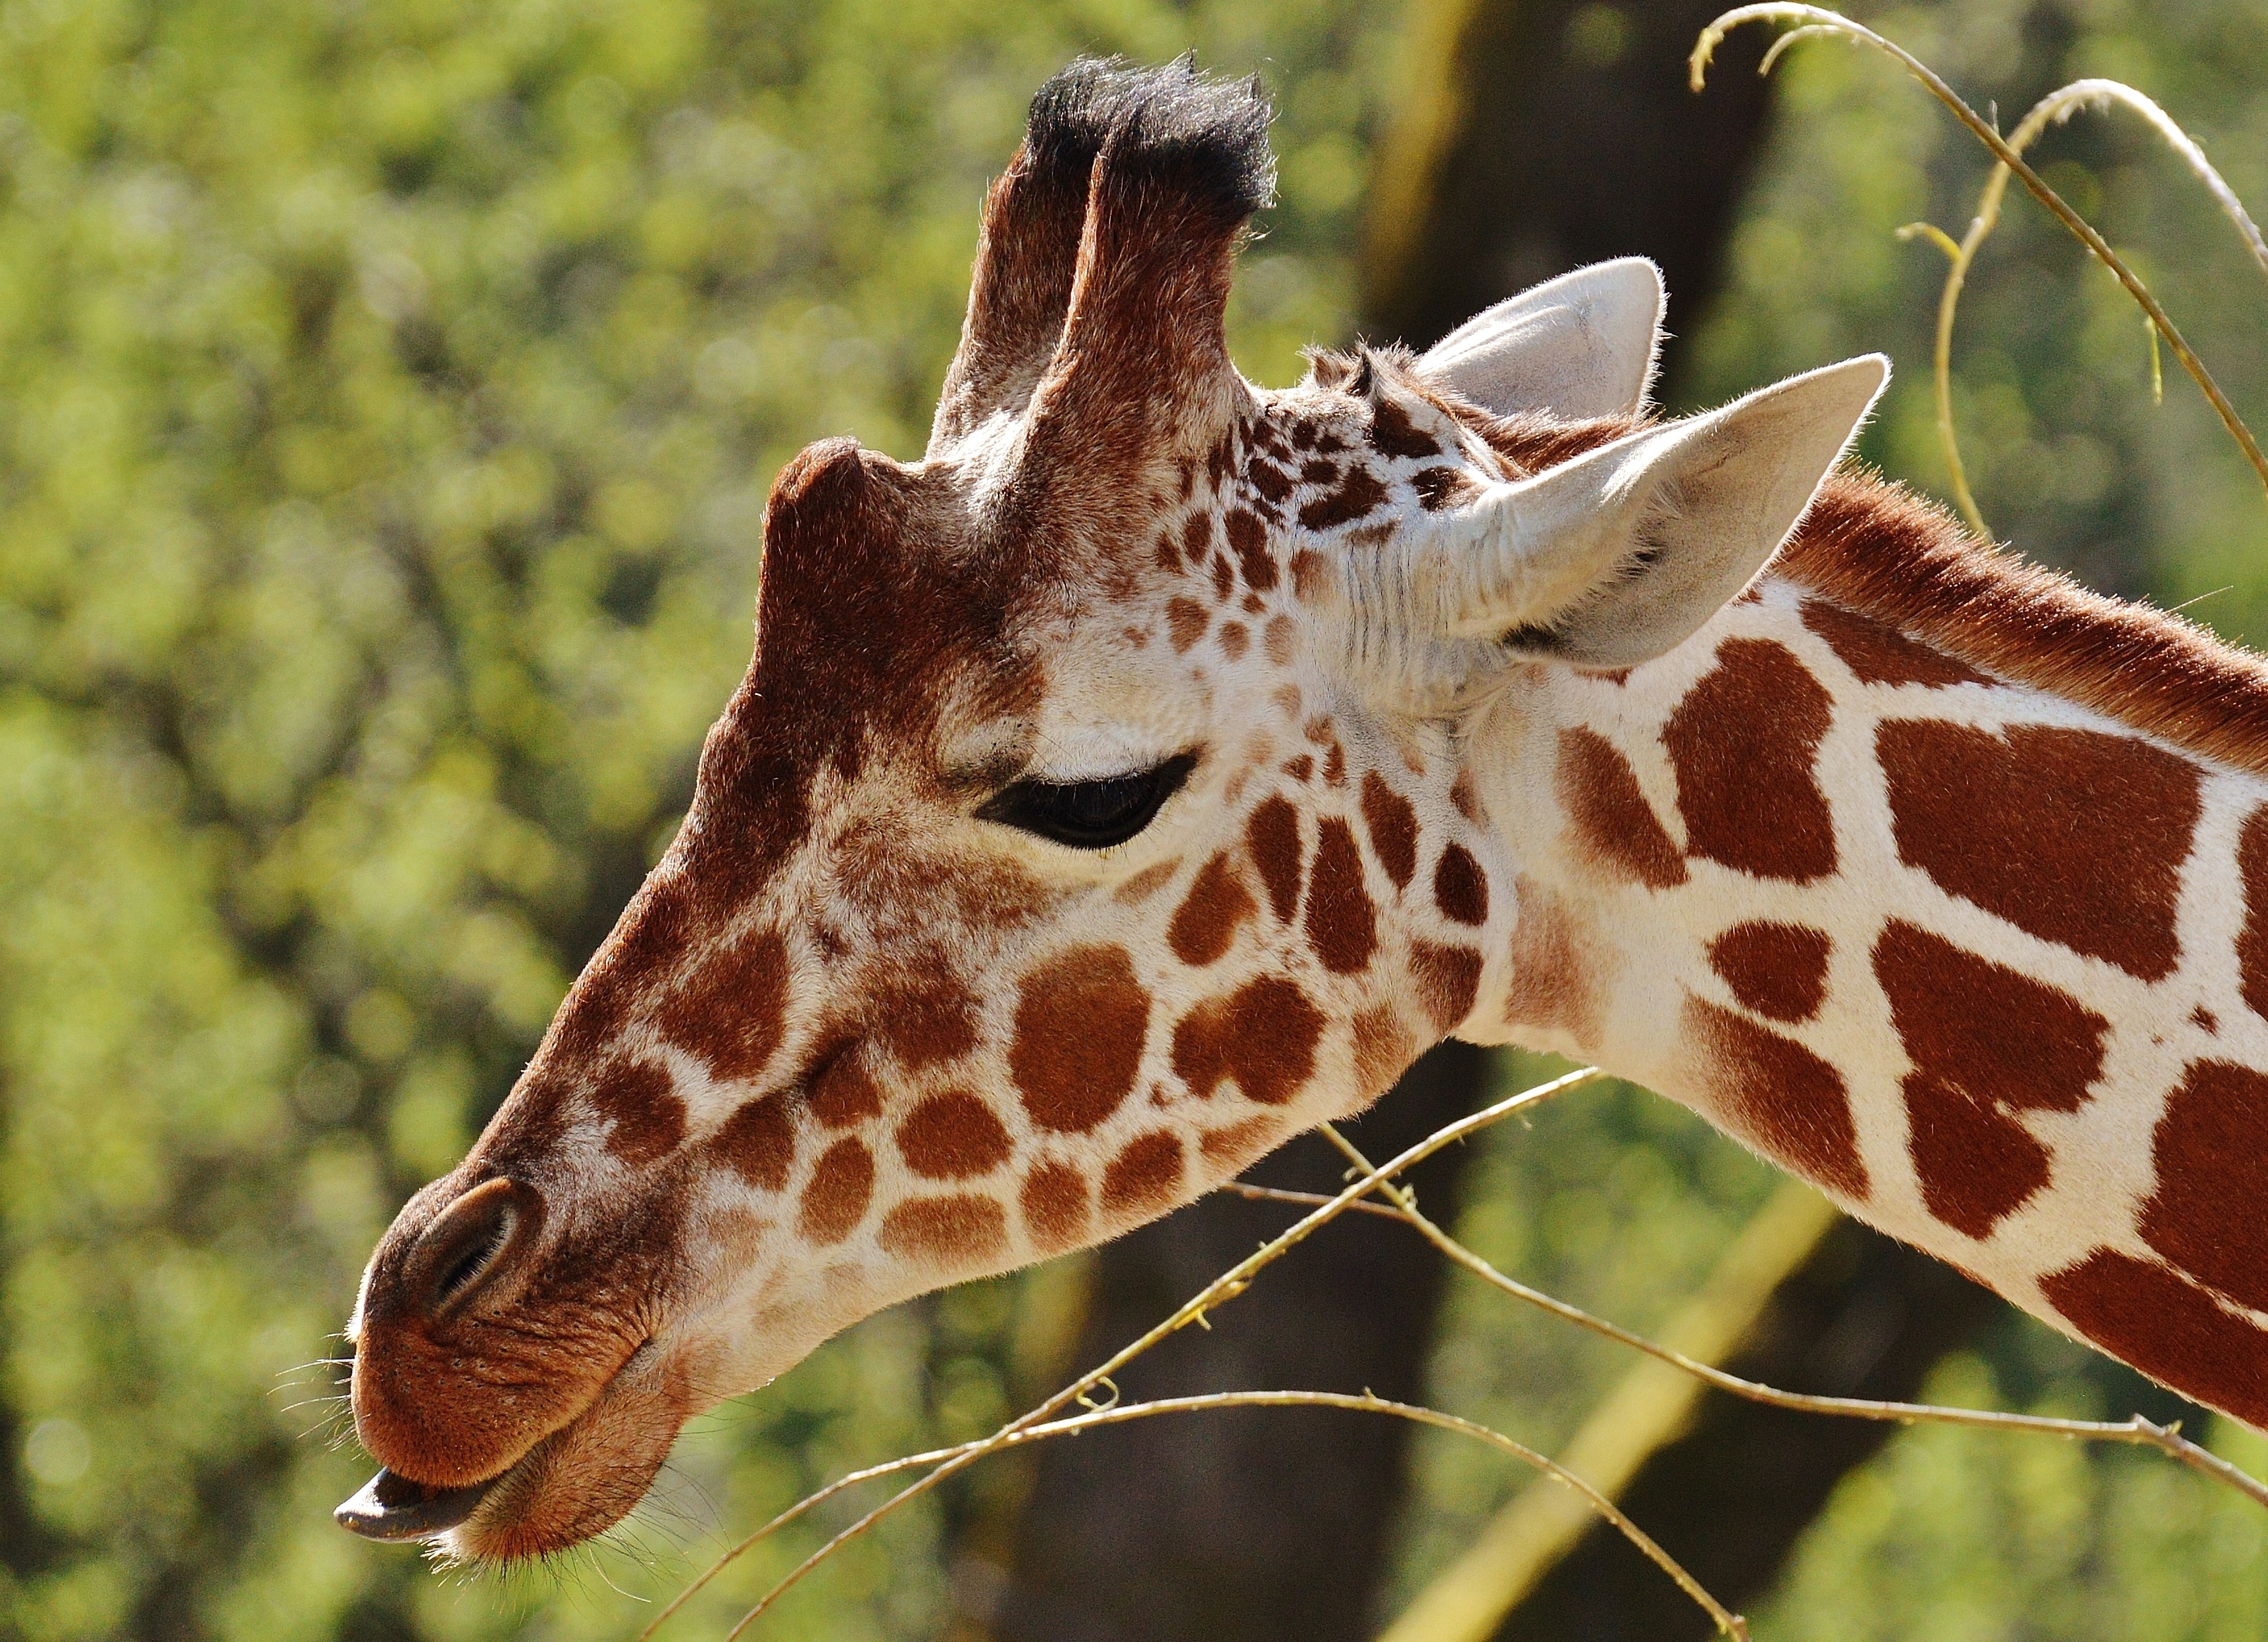 Giraffe Zoo head portrait free image download